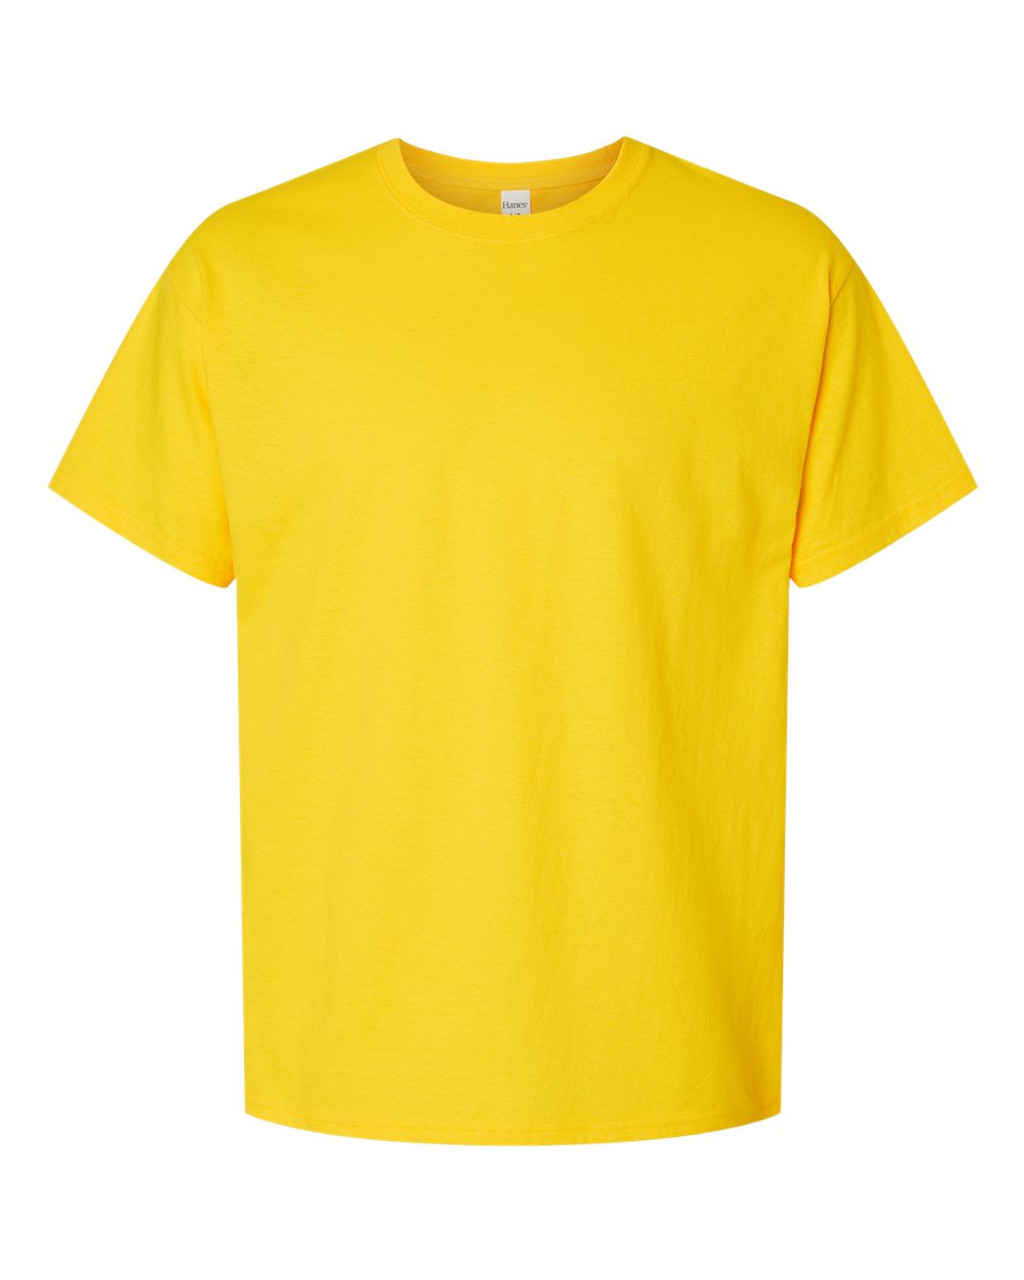 Athletic Yellow